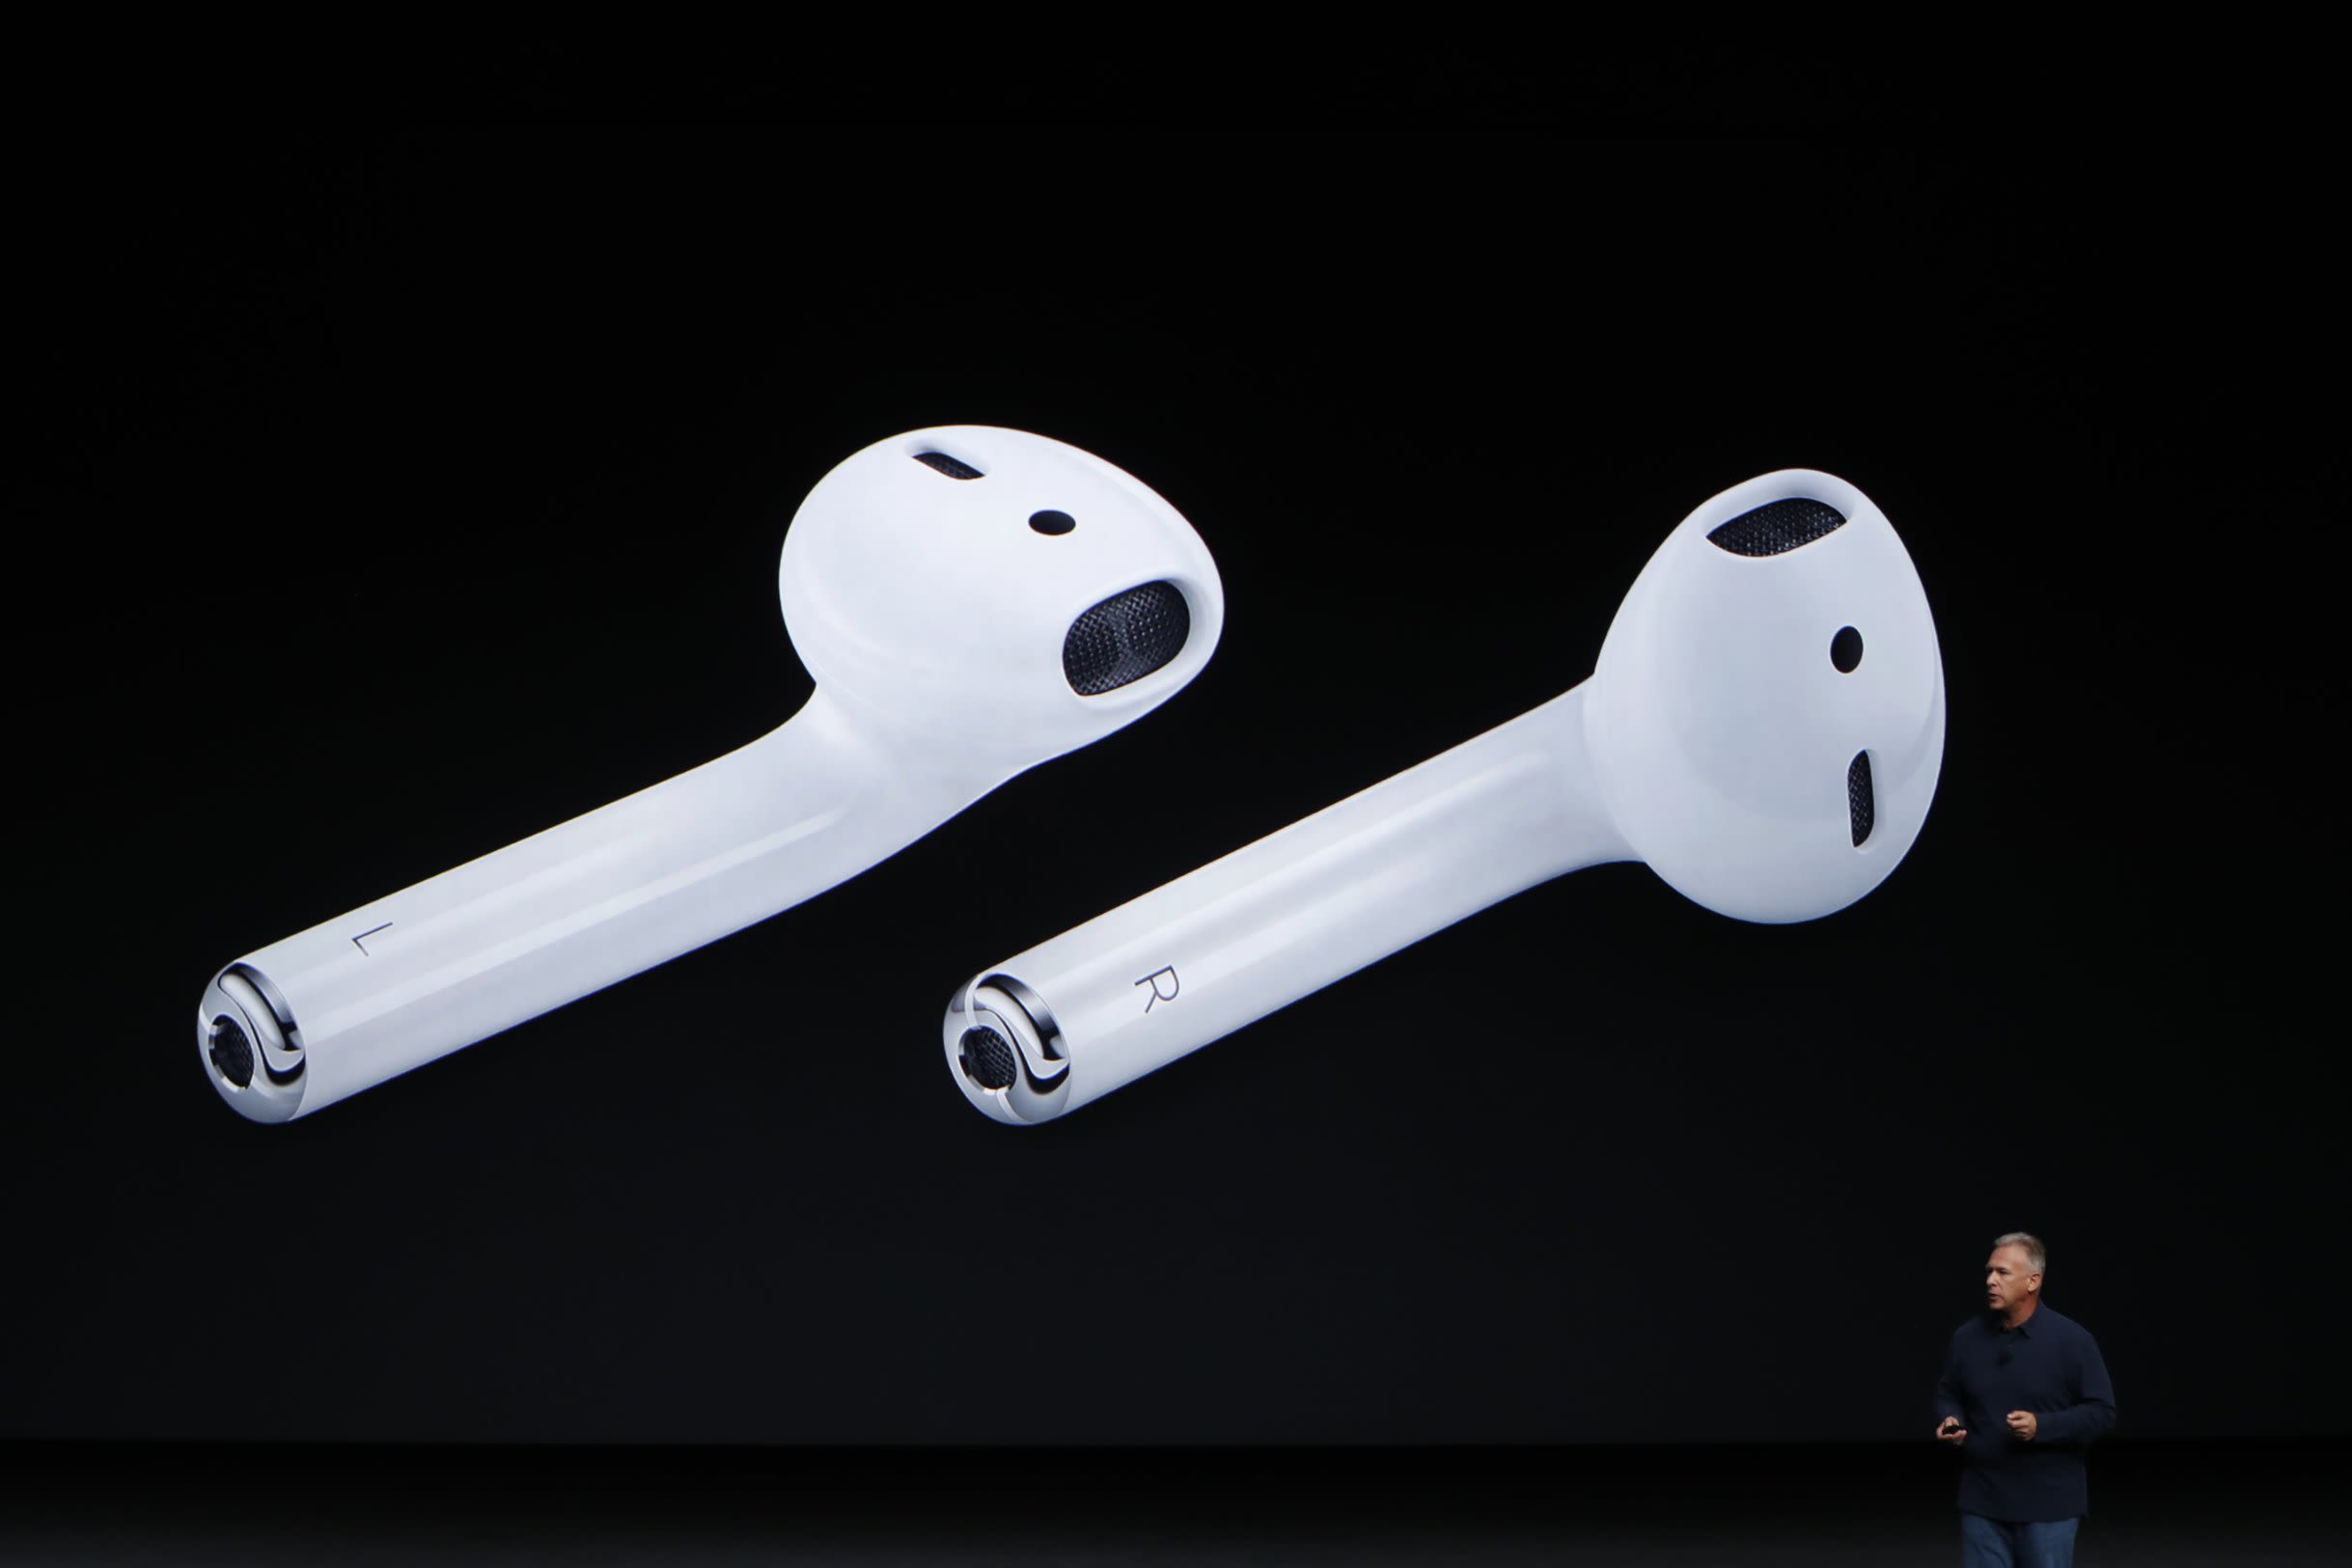 iPhone 7 eliminates headphone jack: to your health? | CNN